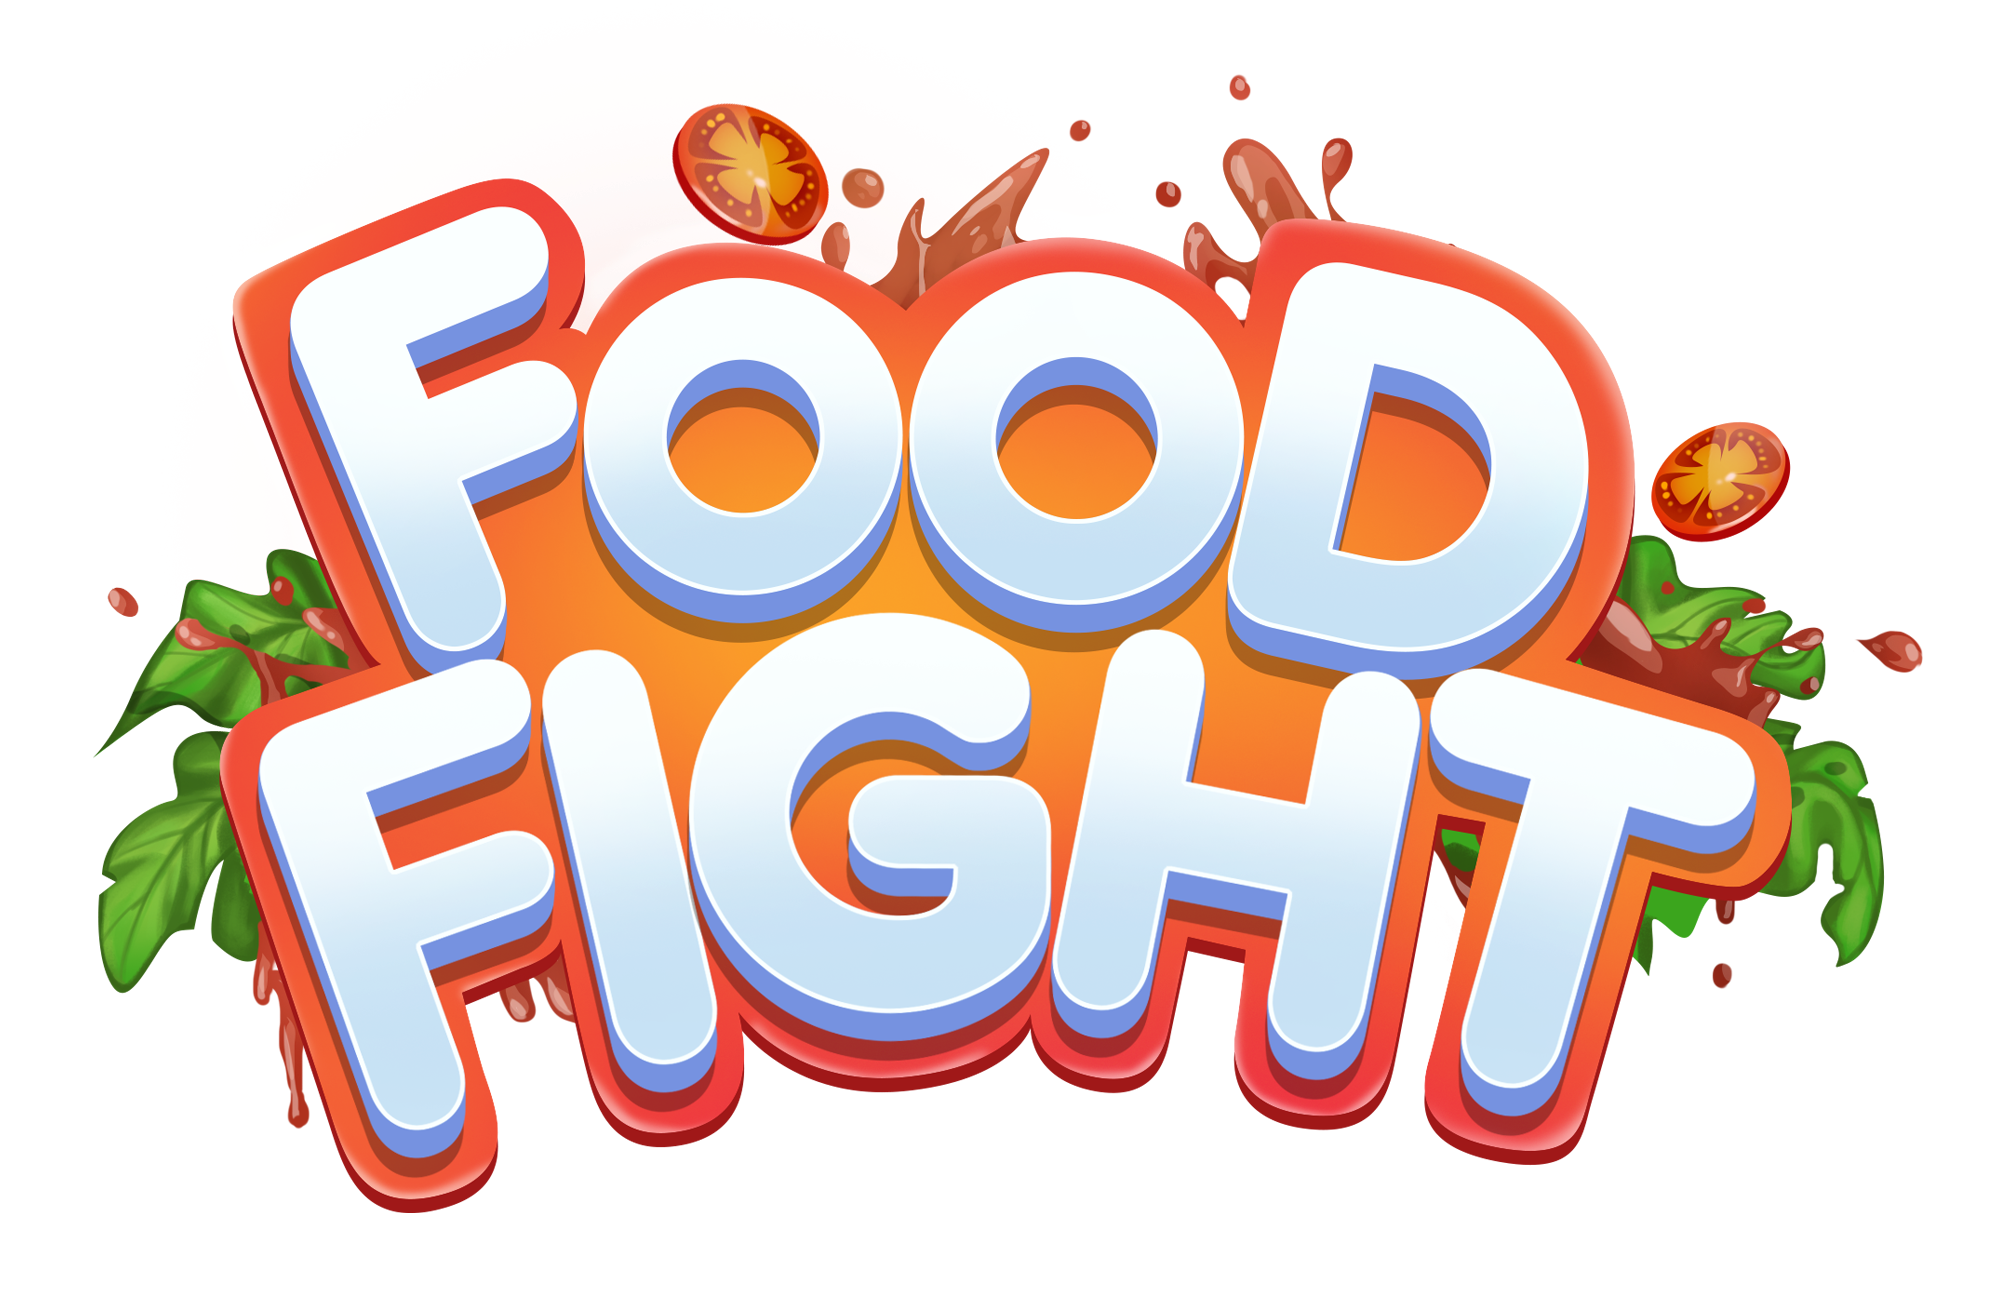 Sample Press Release - Food Fight